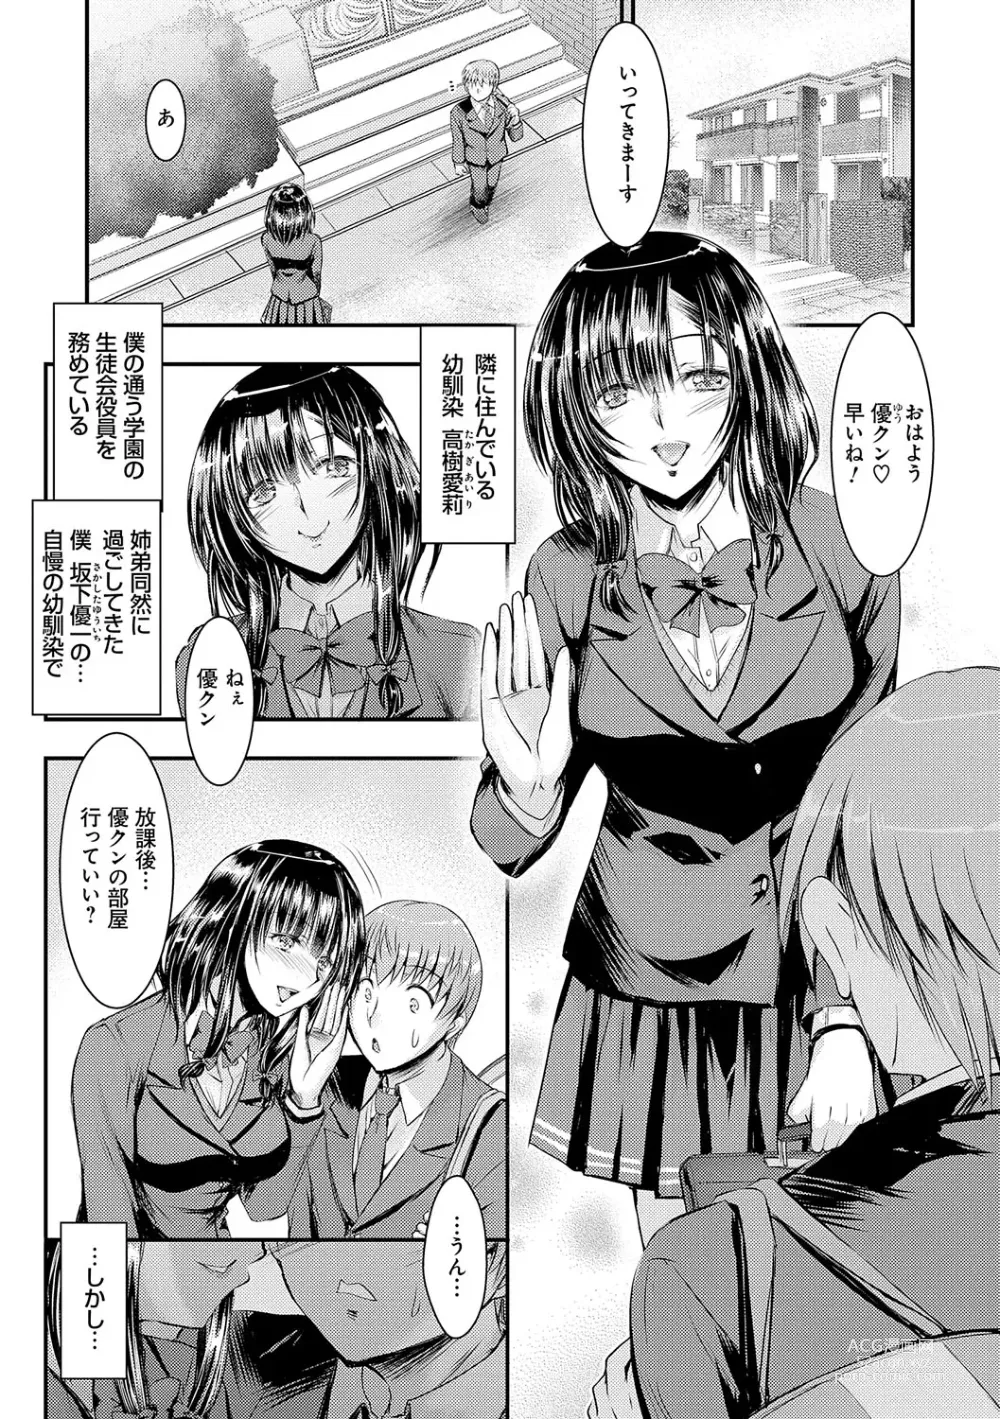 Page 4 of manga Mesu-Ane Marking